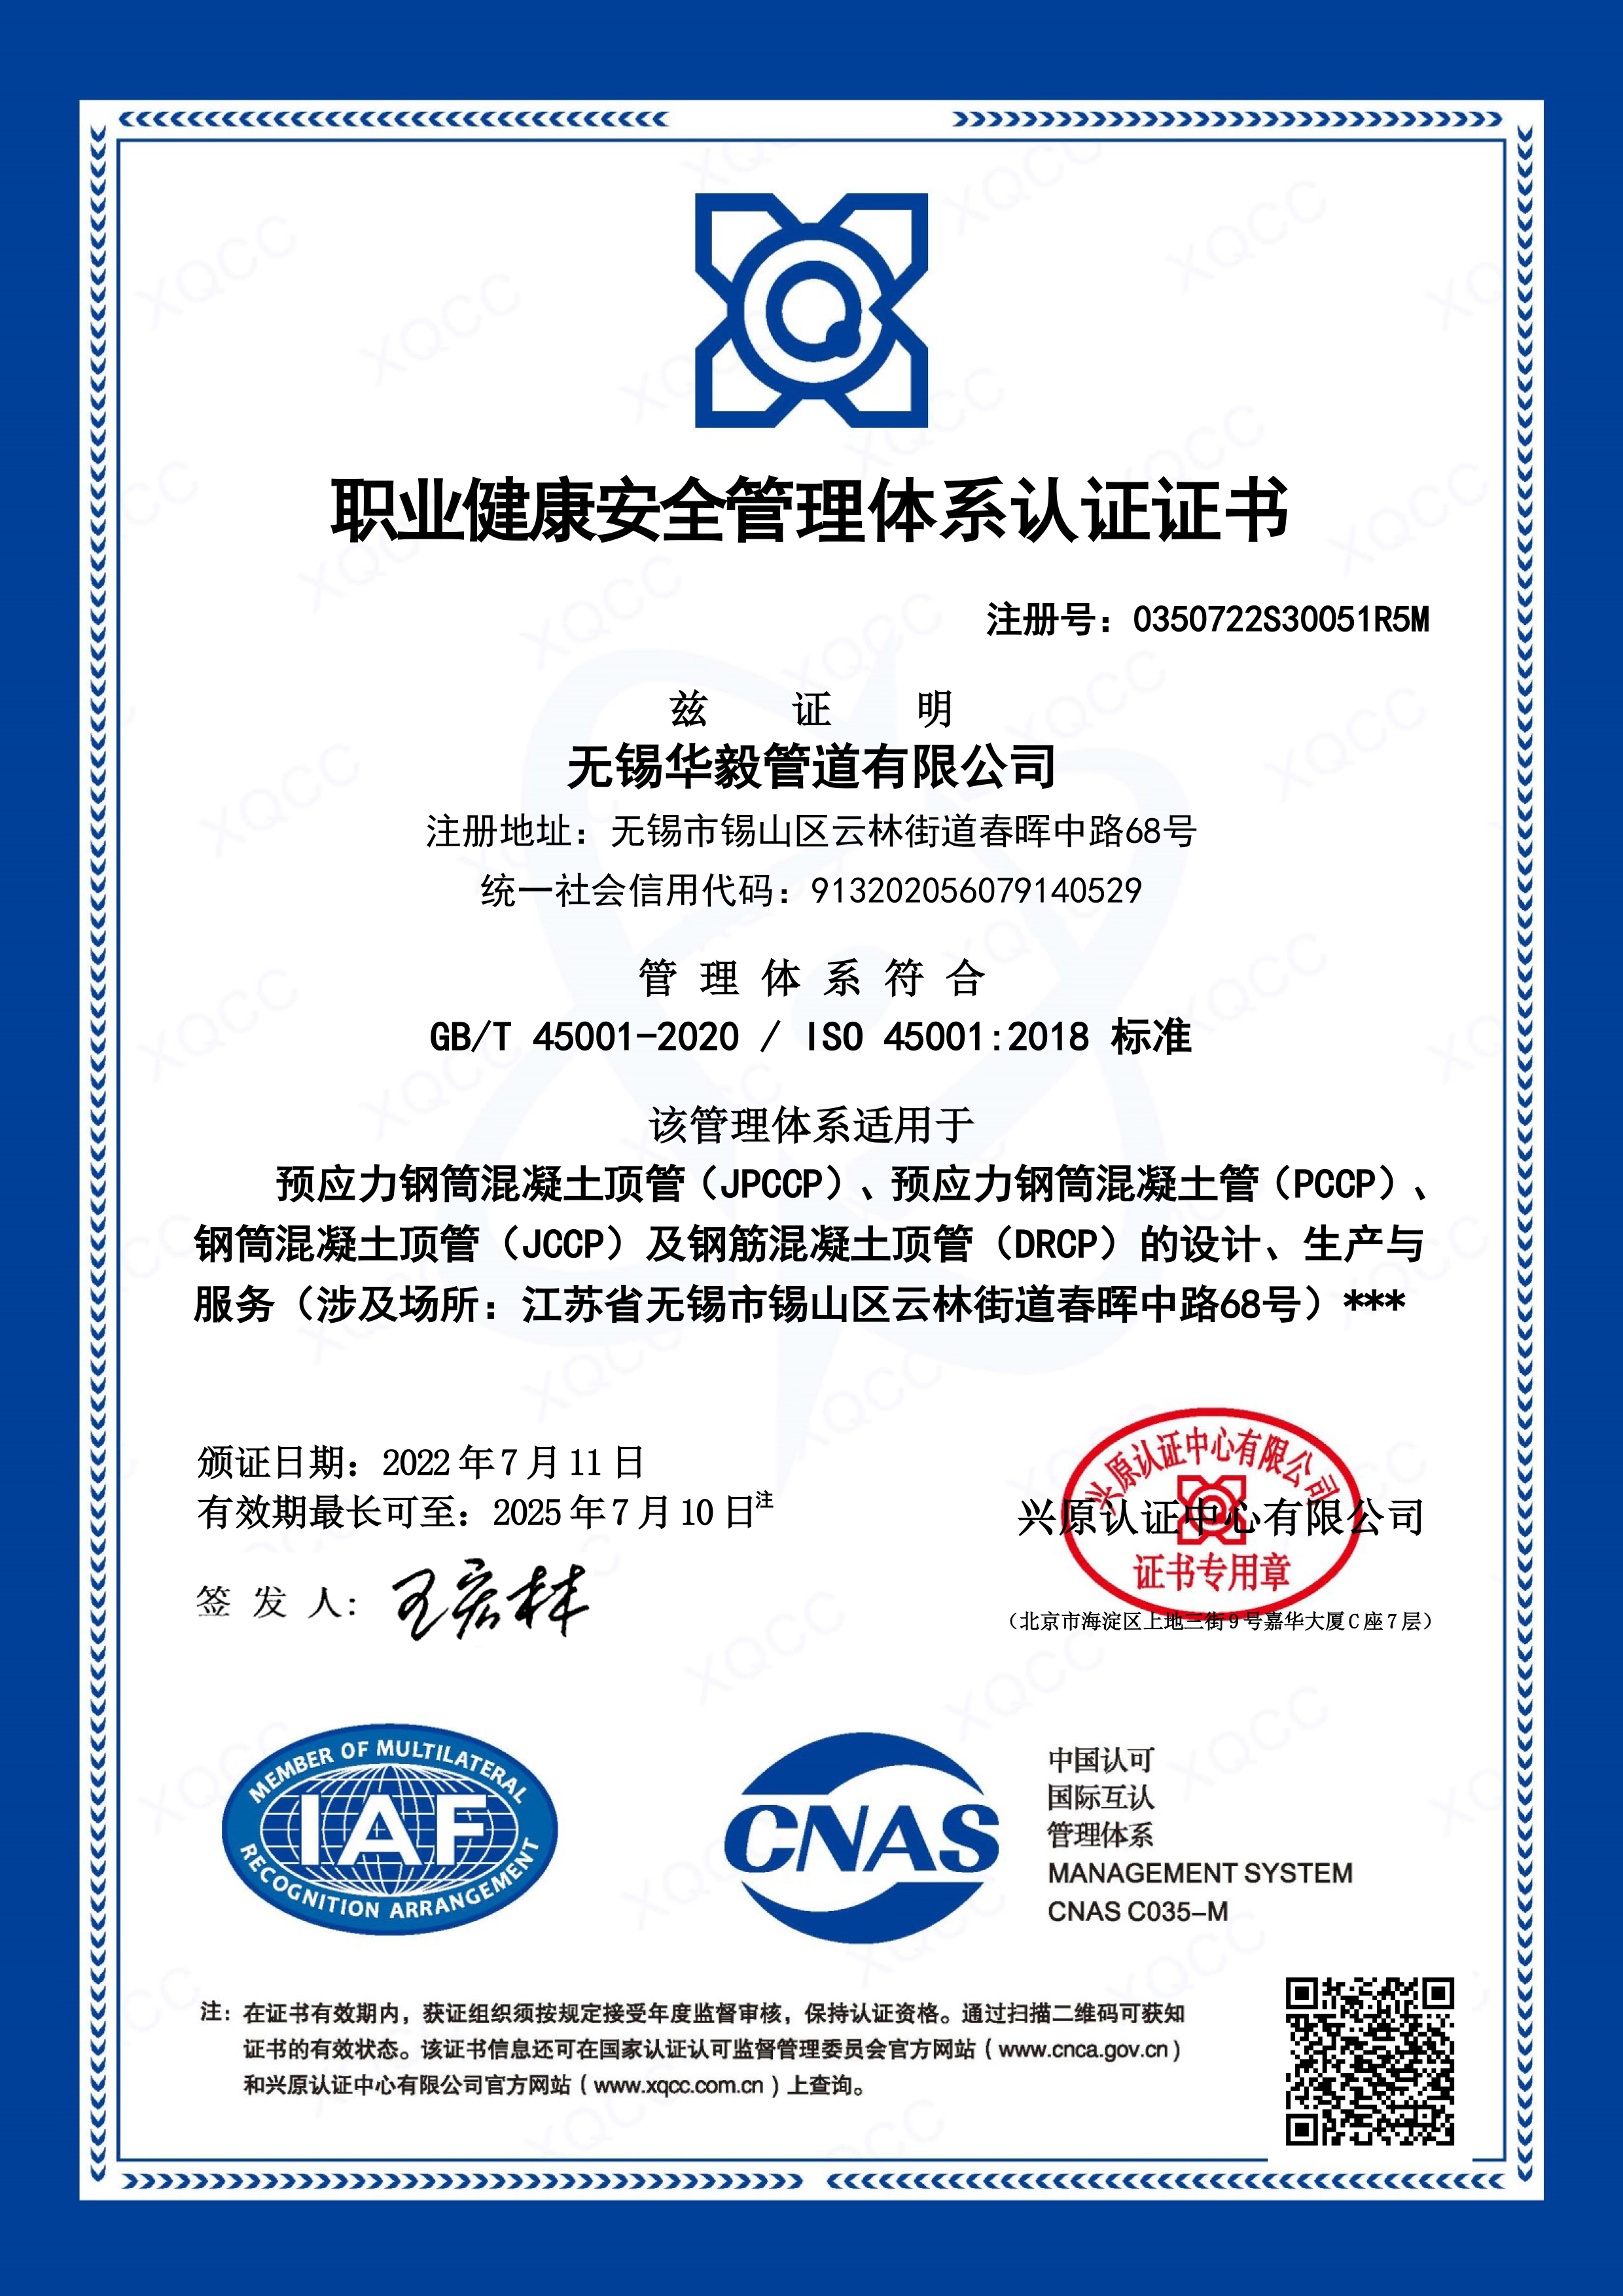 ISO45001證書